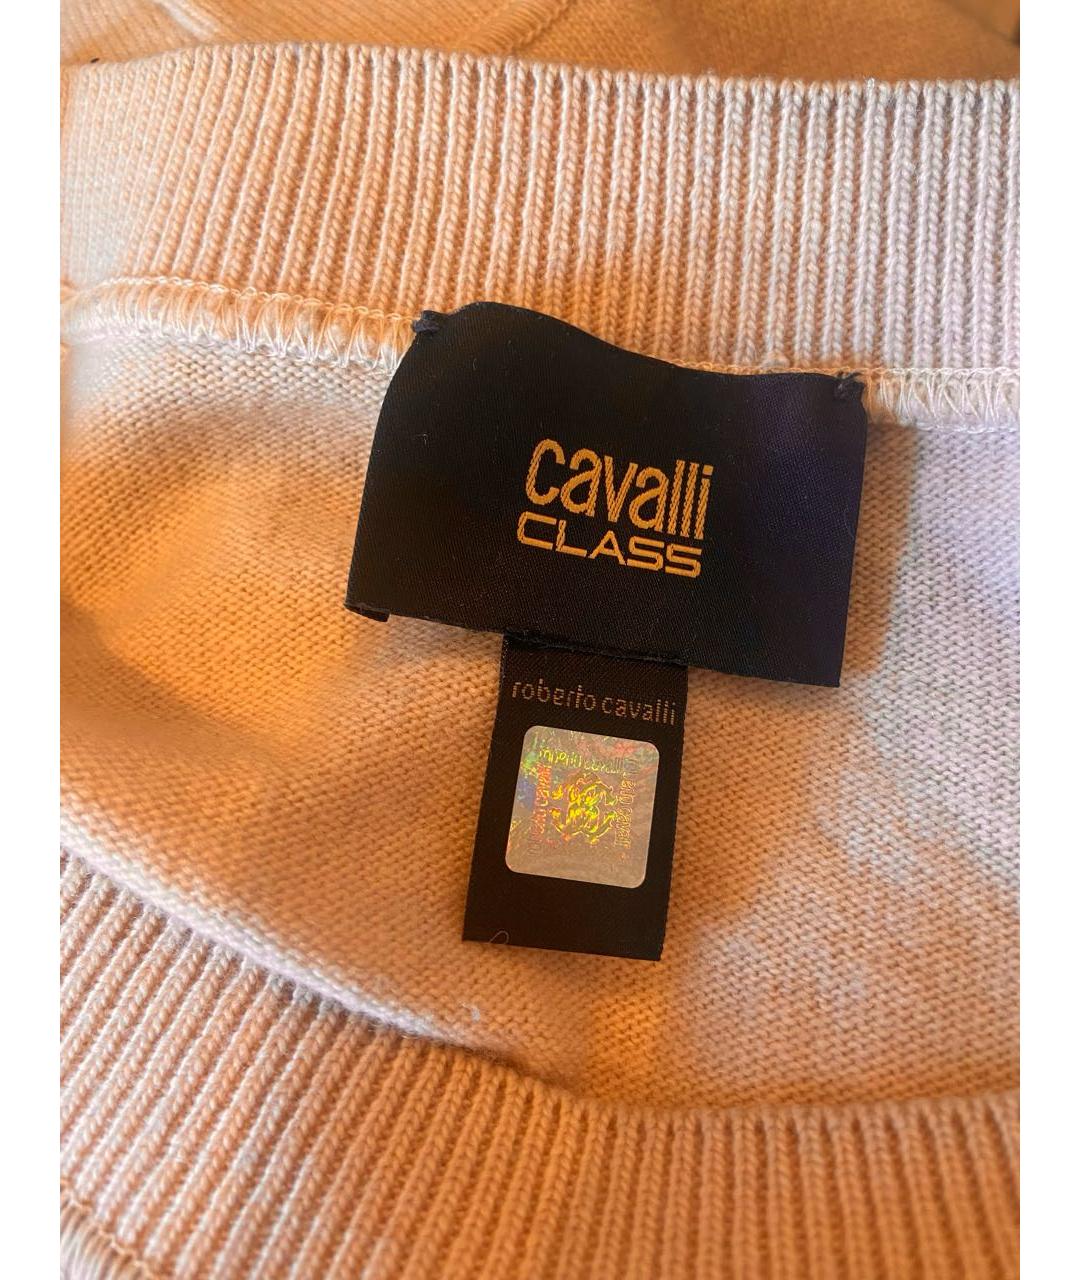 CAVALLI CLASS Мульти шерстяной джемпер / свитер, фото 2